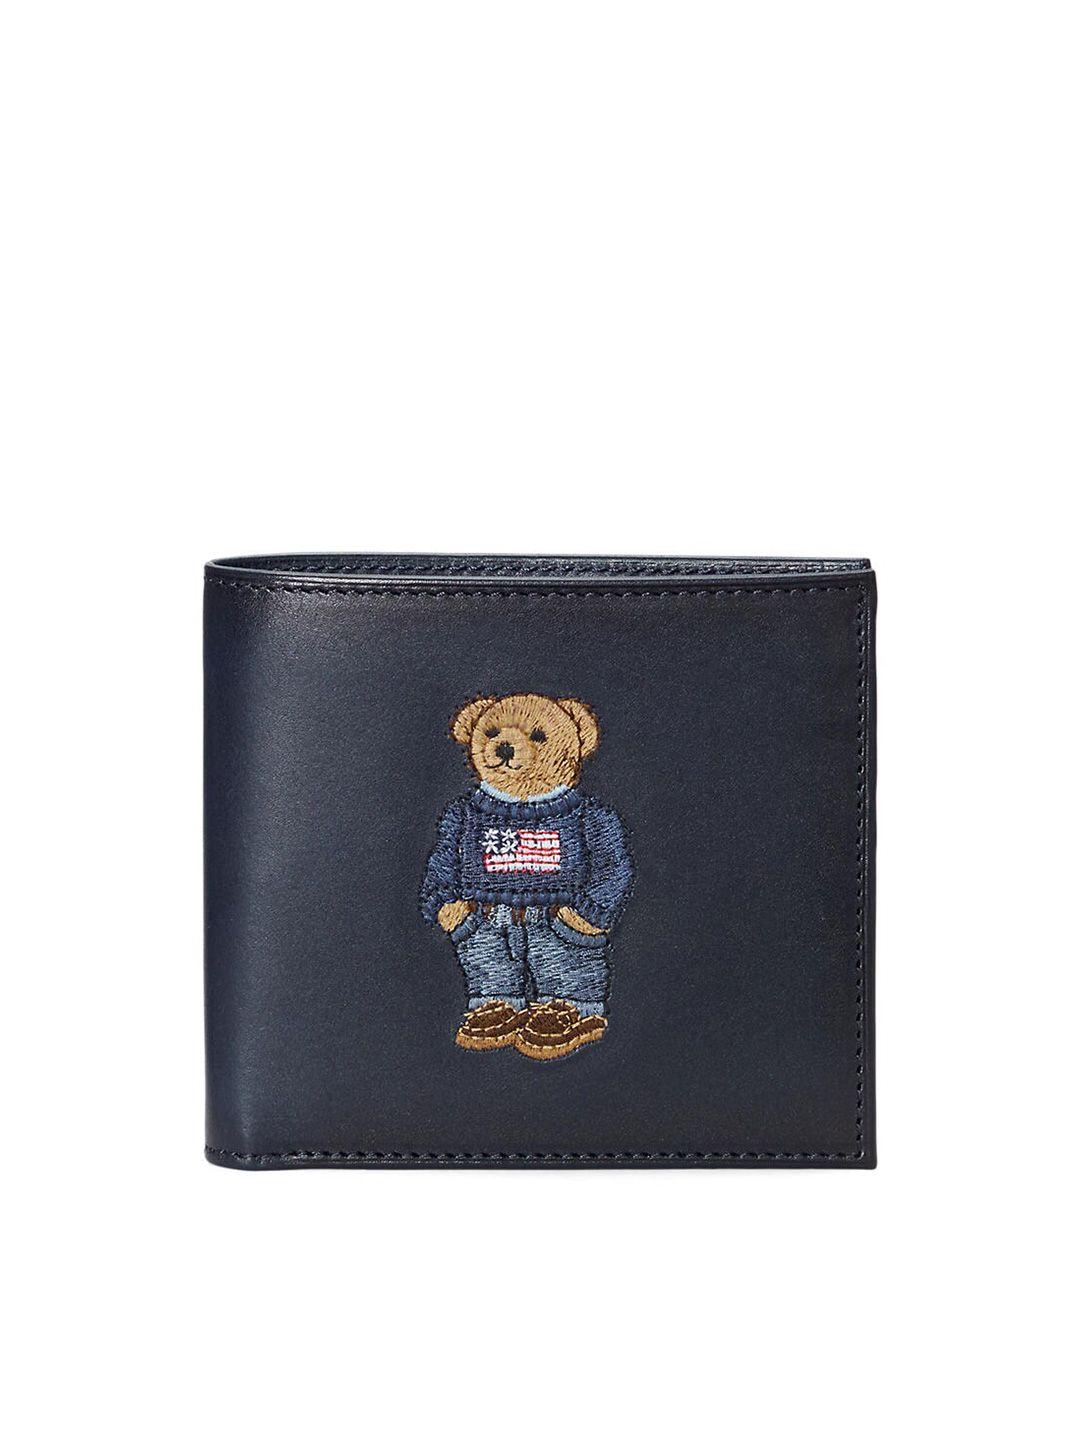 polo-ralph-lauren-men-leather-two-fold-wallet